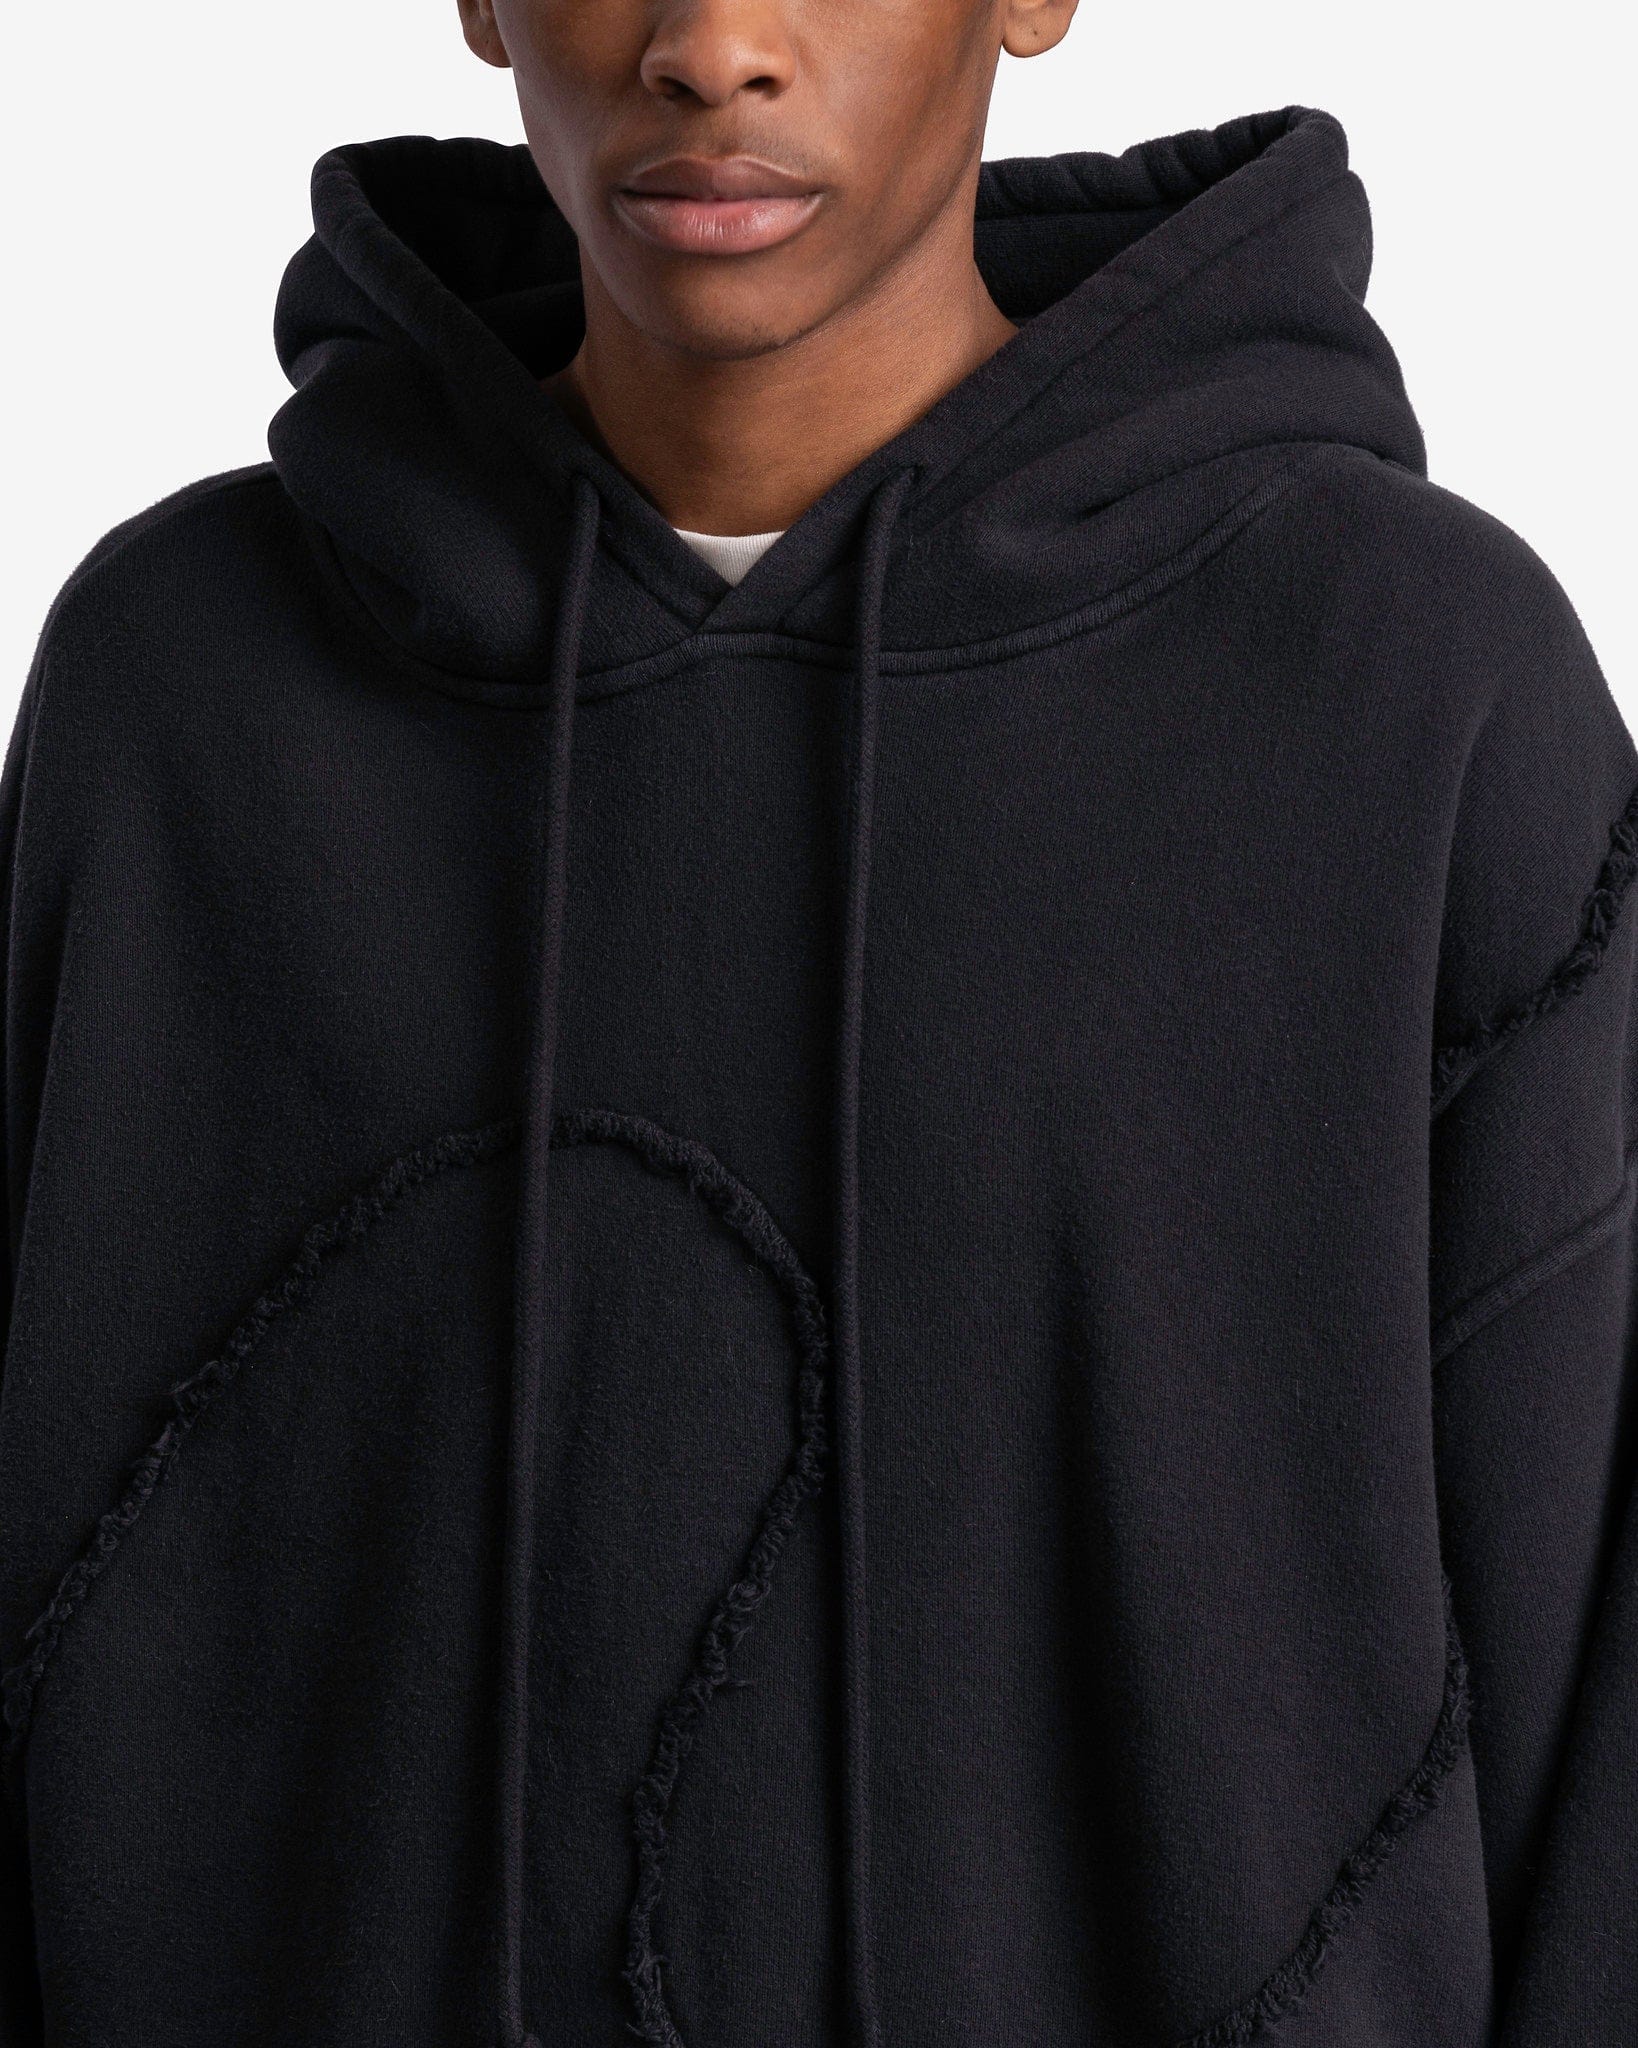 Swirl Premium Knit Fleece Hoodie in Black